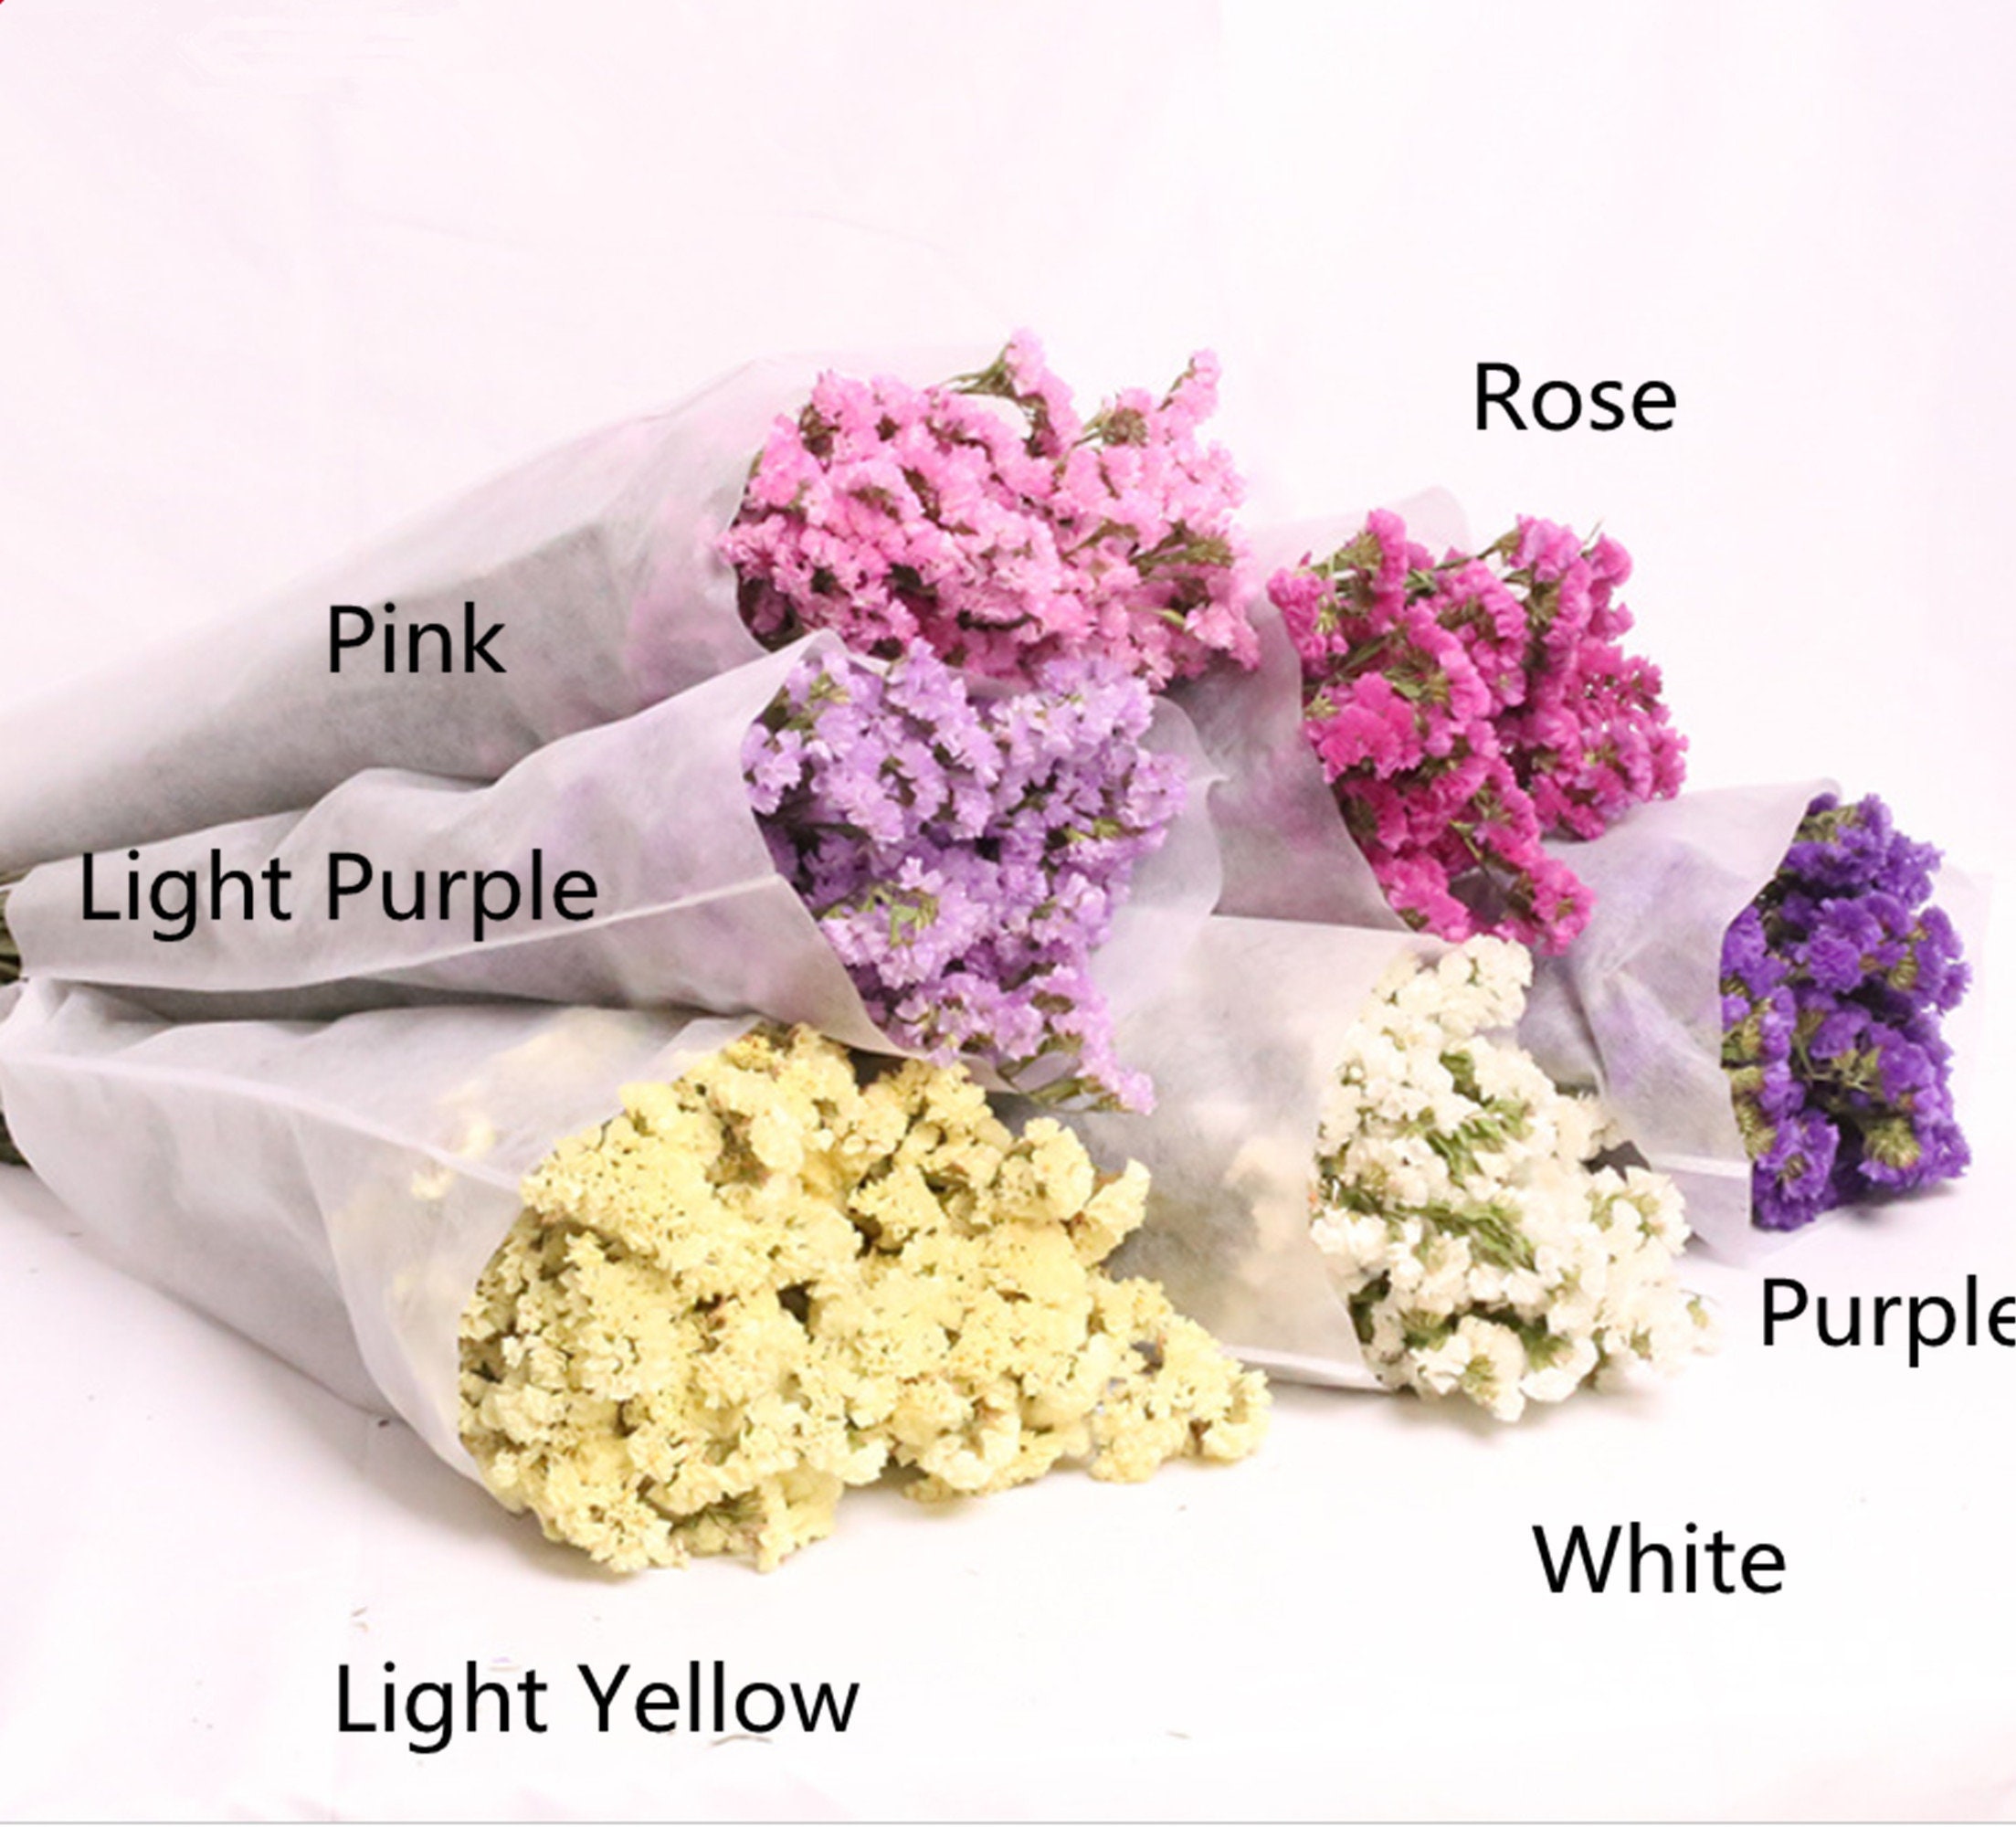 Flores secas prensadas, más de 170 piezas de flores secas mixtas para  resina, rellenos de resina floral seca natural a granel, accesorios de